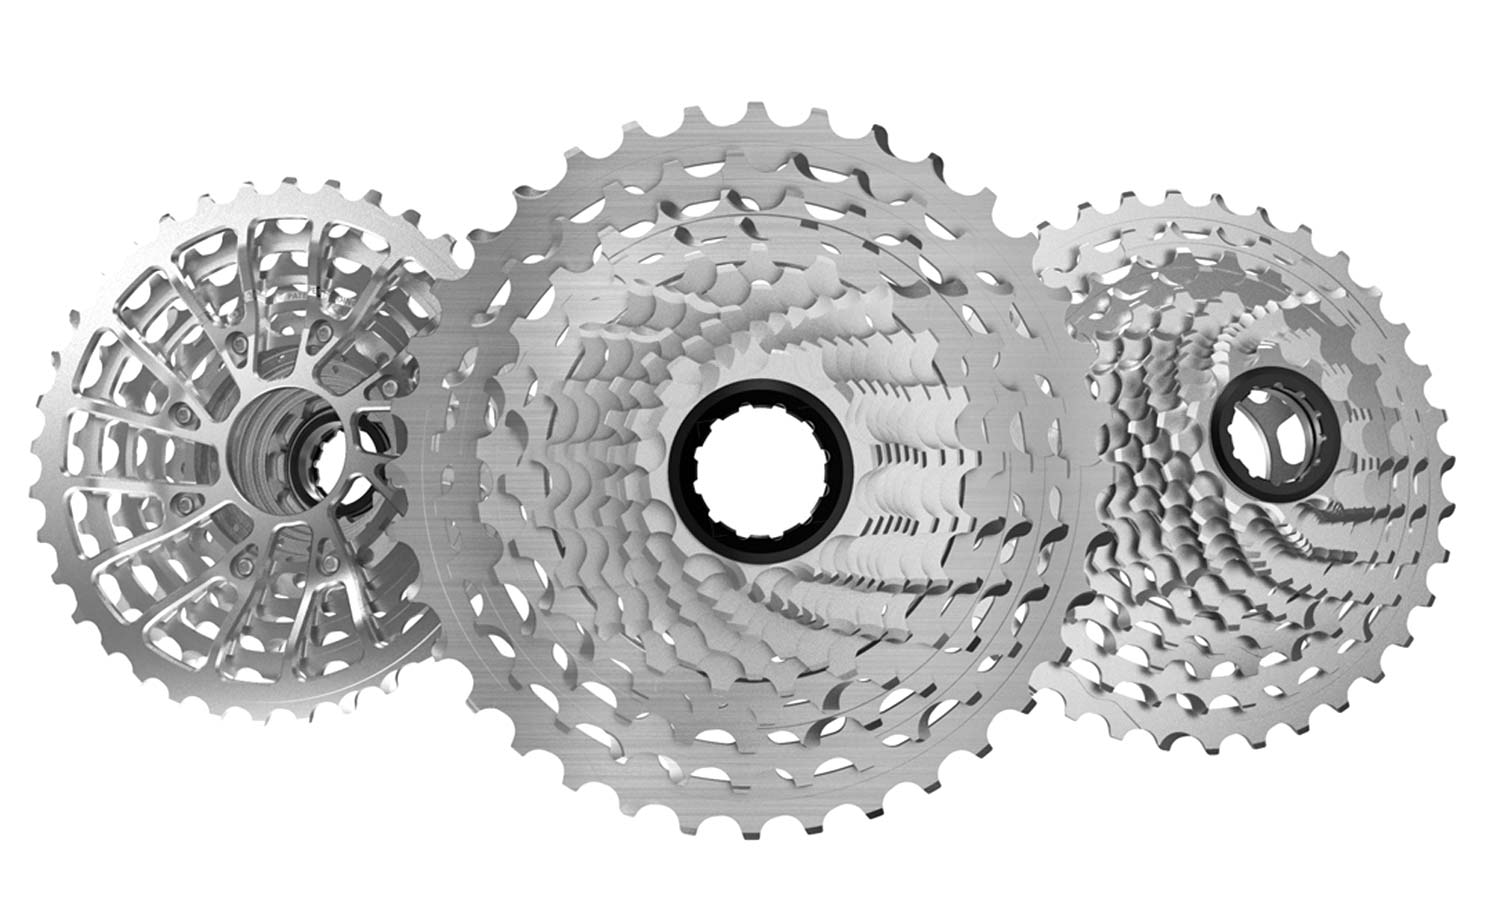 Rotor 1×13, 13-speed road bike hydraulic drivetrains